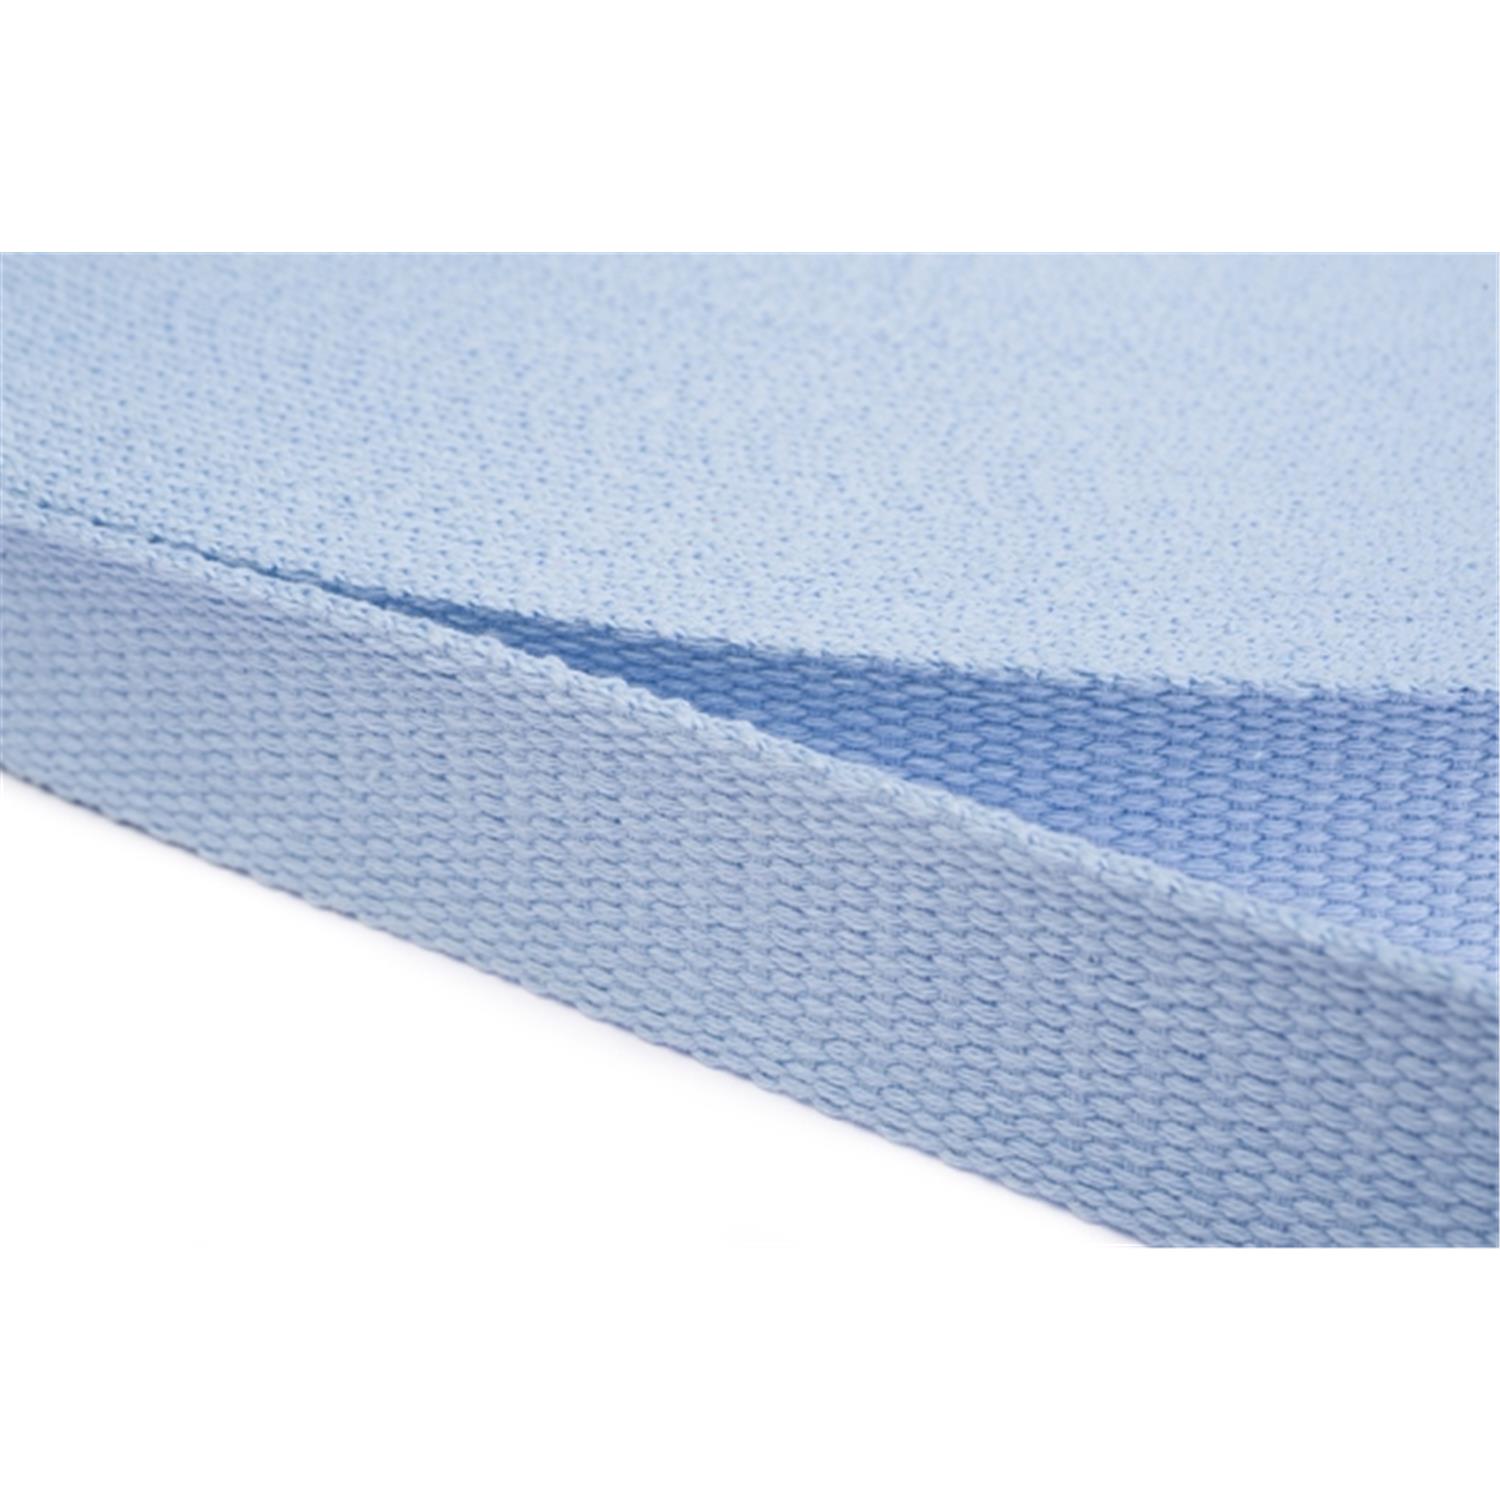 Gurtband aus Baumwolle 50mm in 20 Farben 11 - hellblau 12 Meter